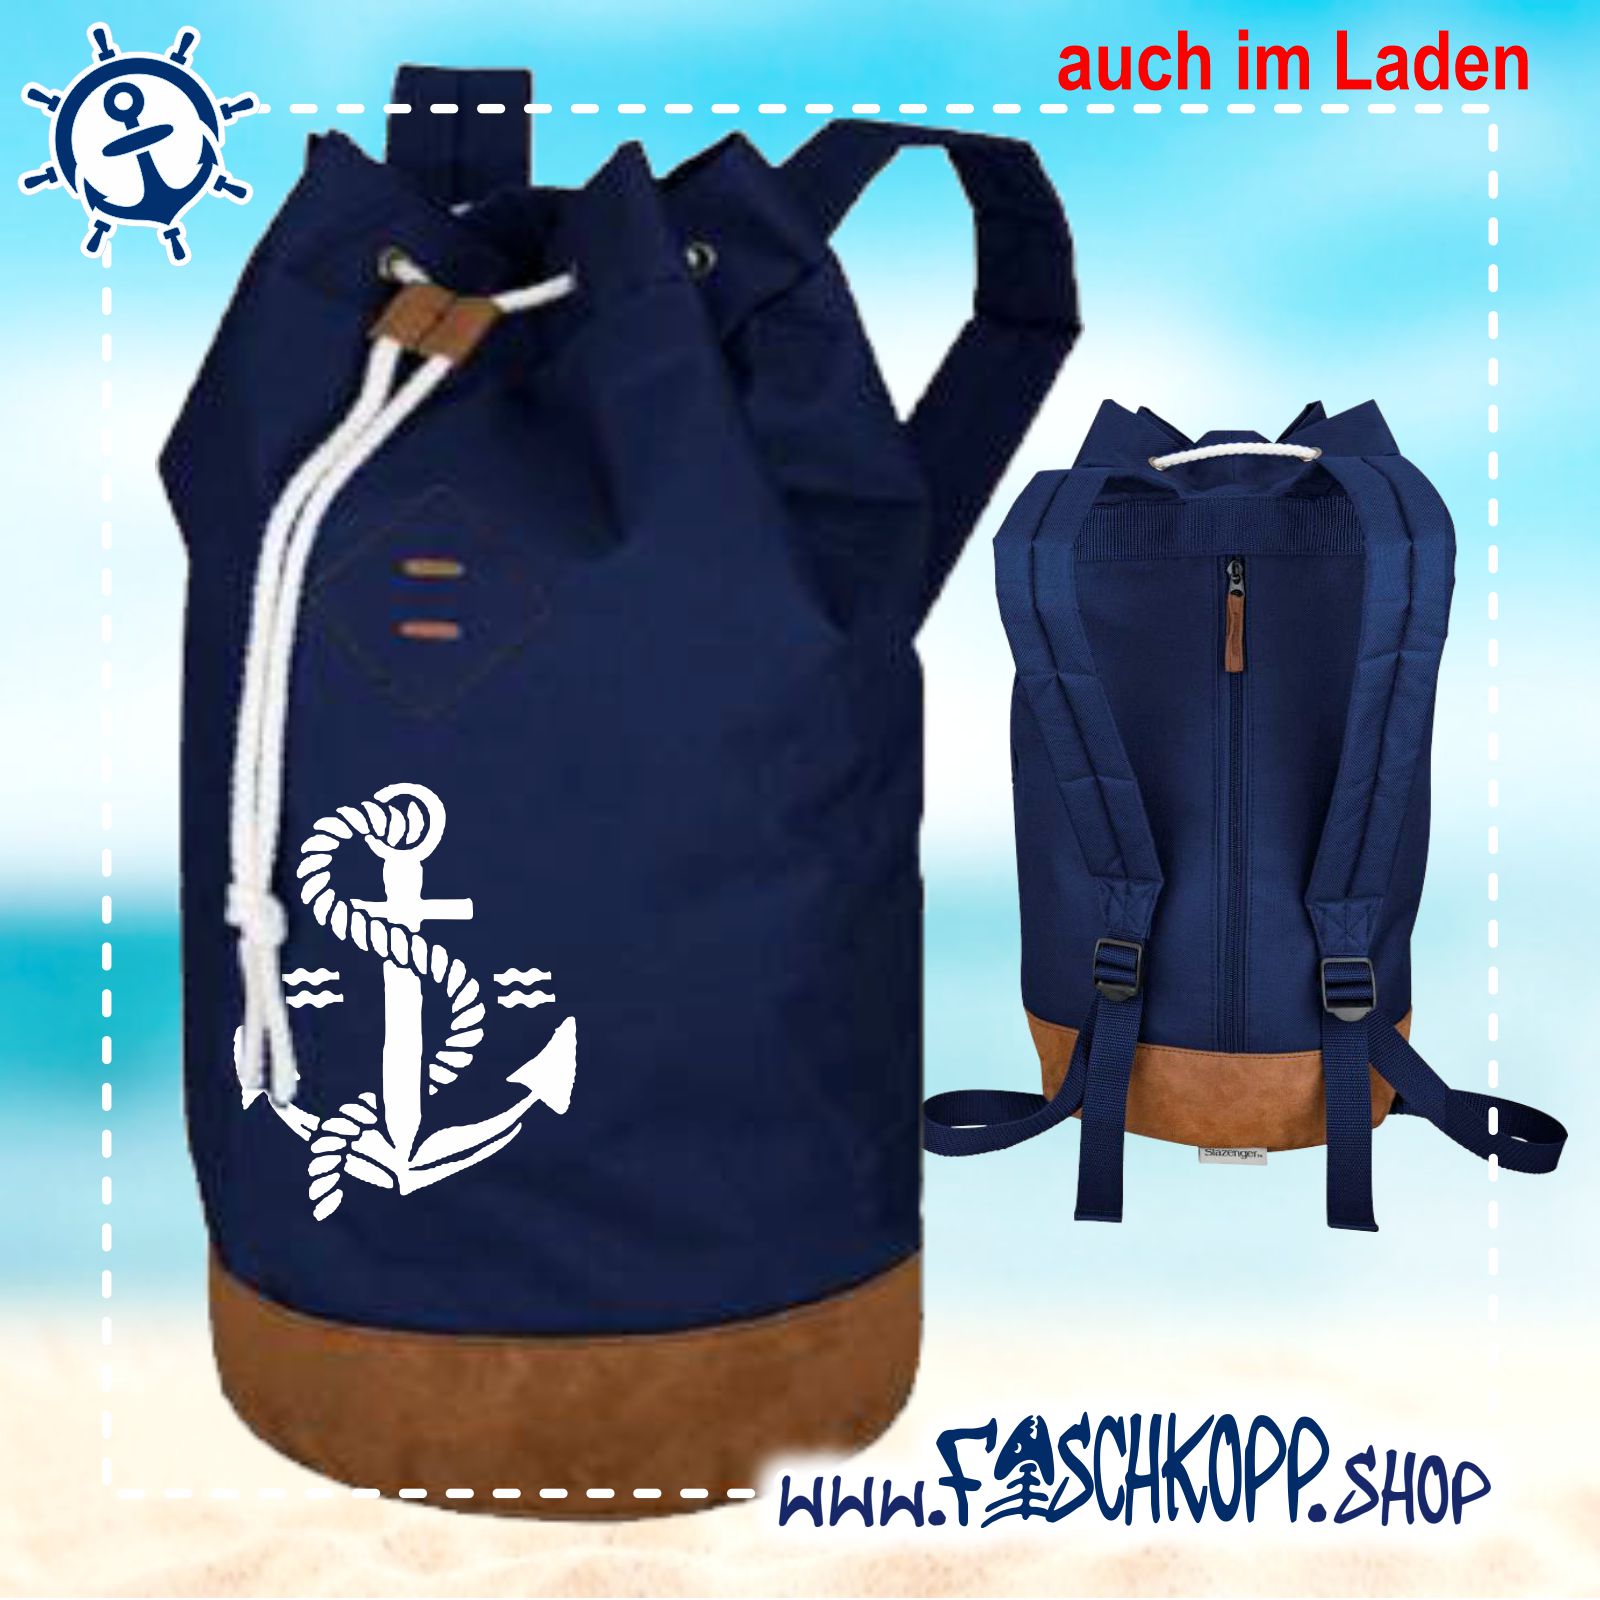 Maritime Baumwoll Rückentüte mit Anker Motiv Seesack Rucksack 